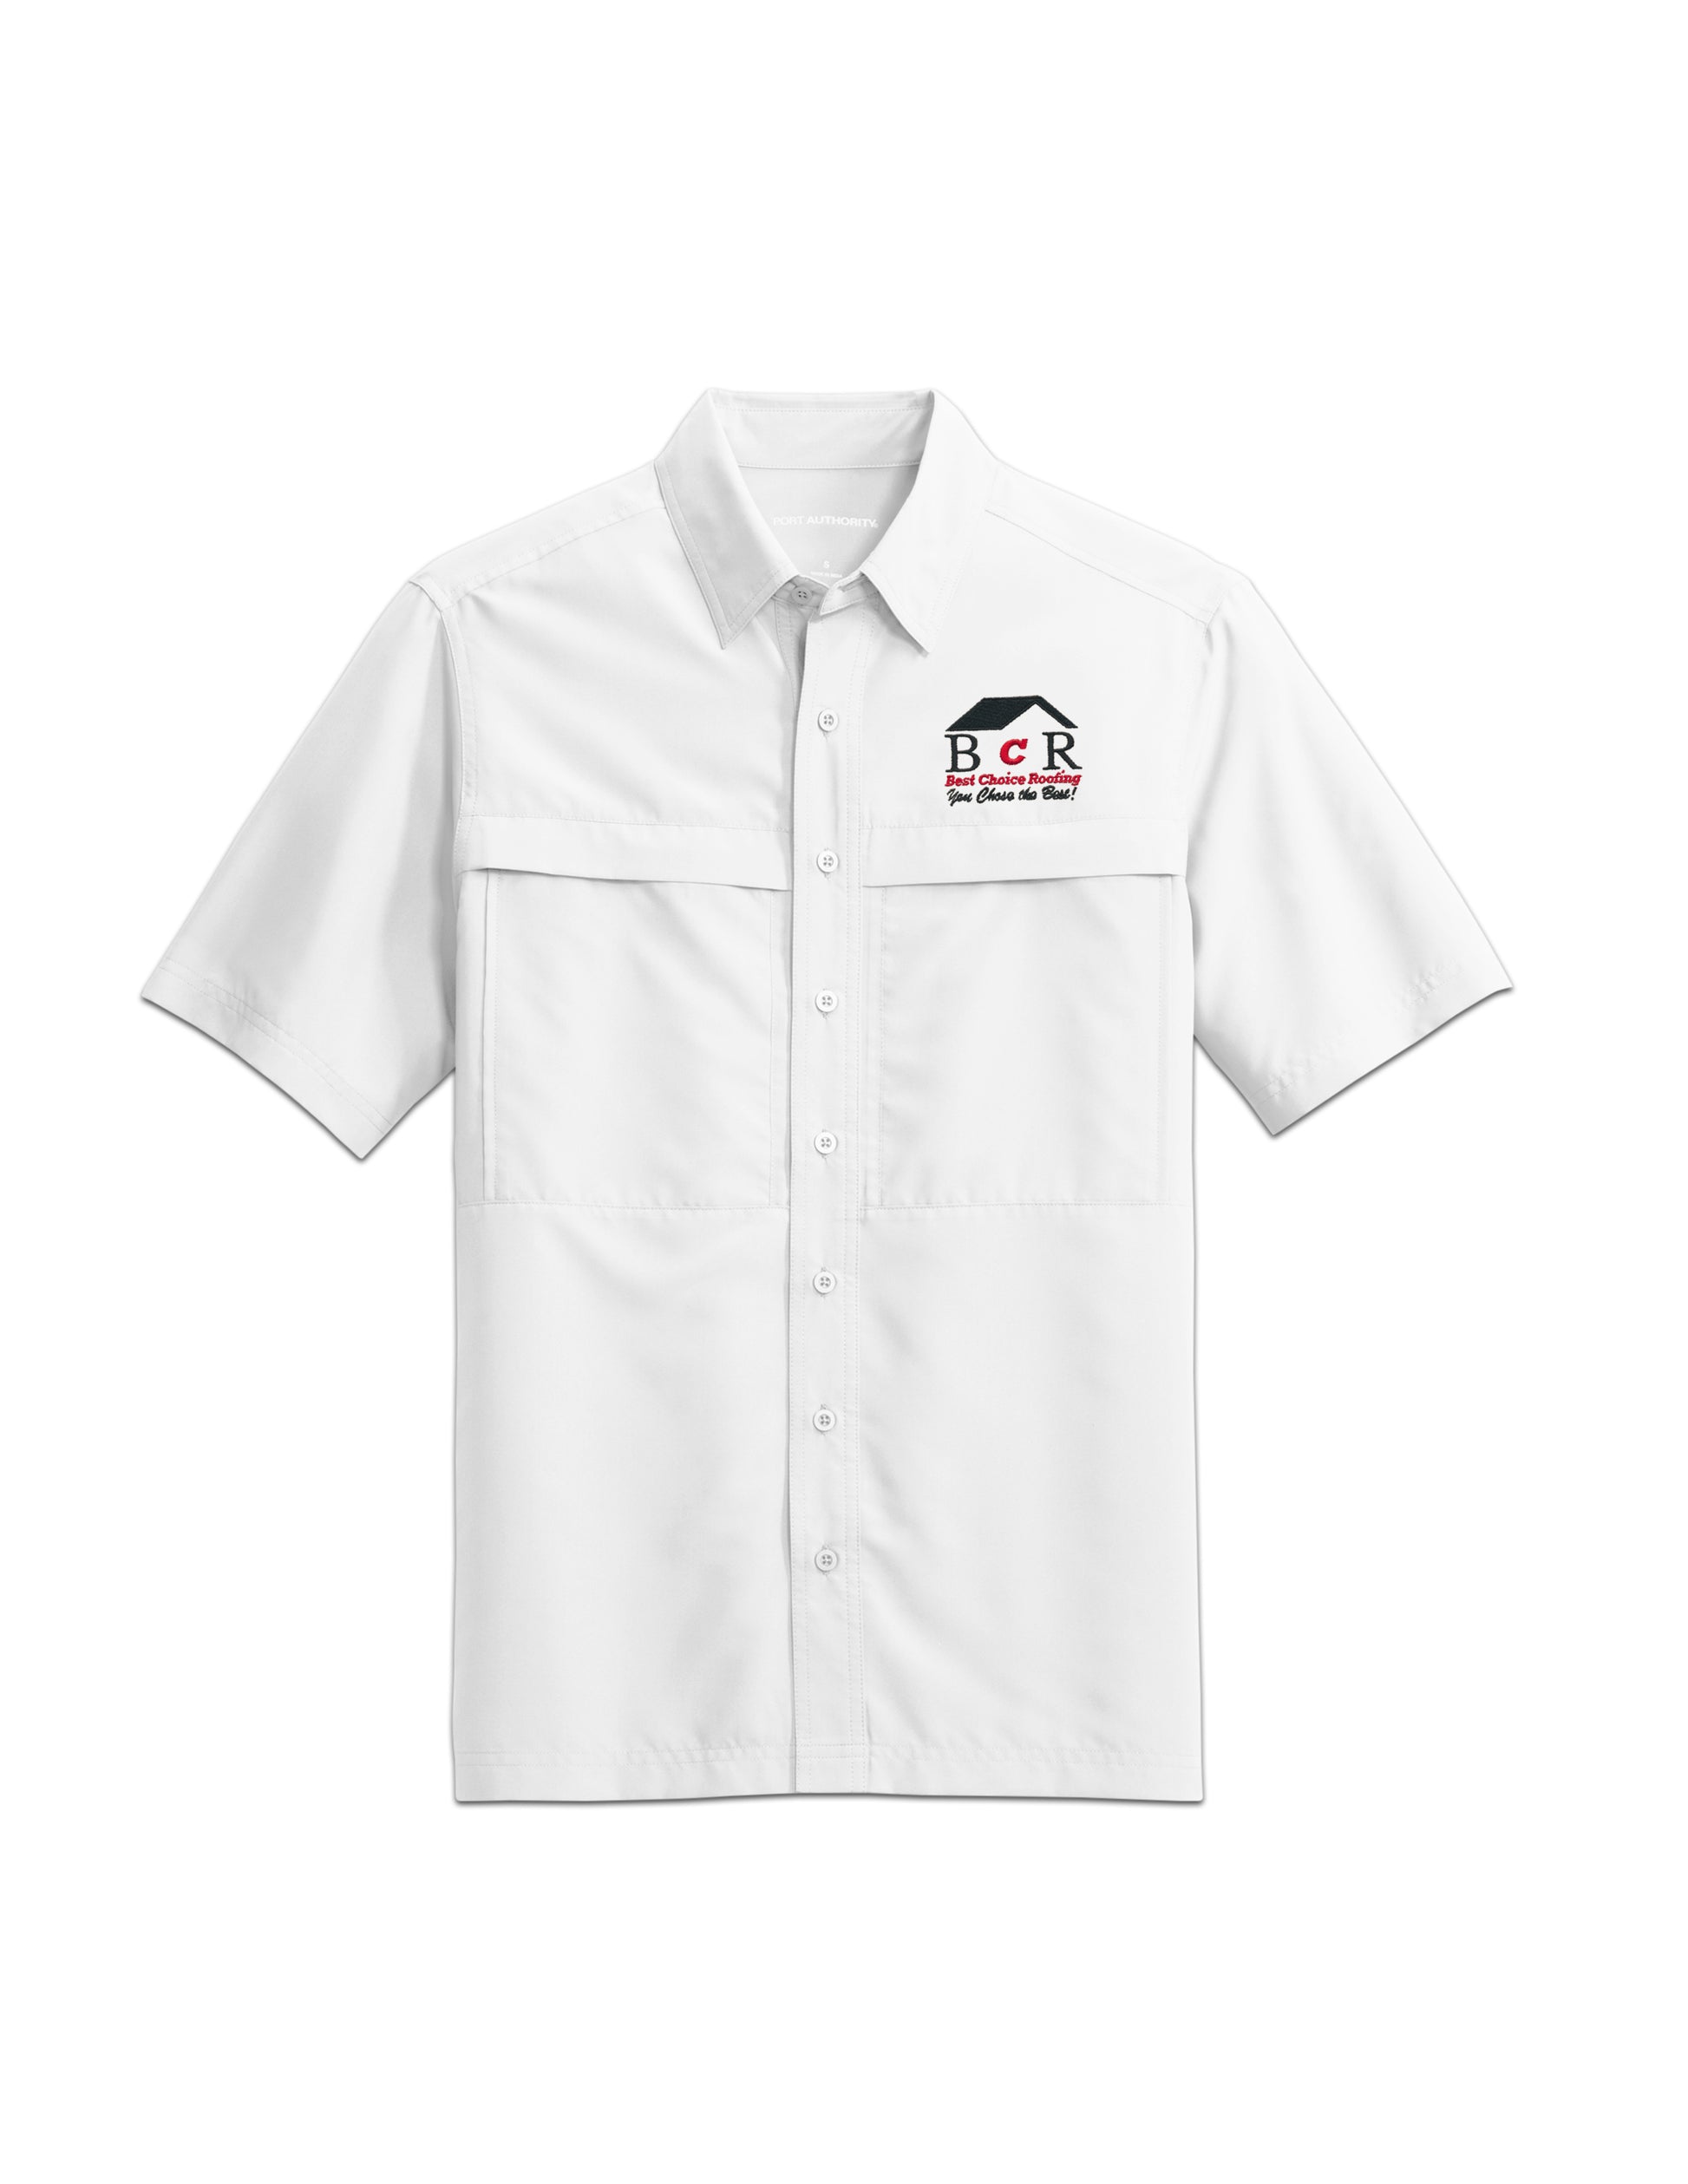 BCR Short Sleeve UV Daybreak Shirt – Best Choice Roofing Merchandise